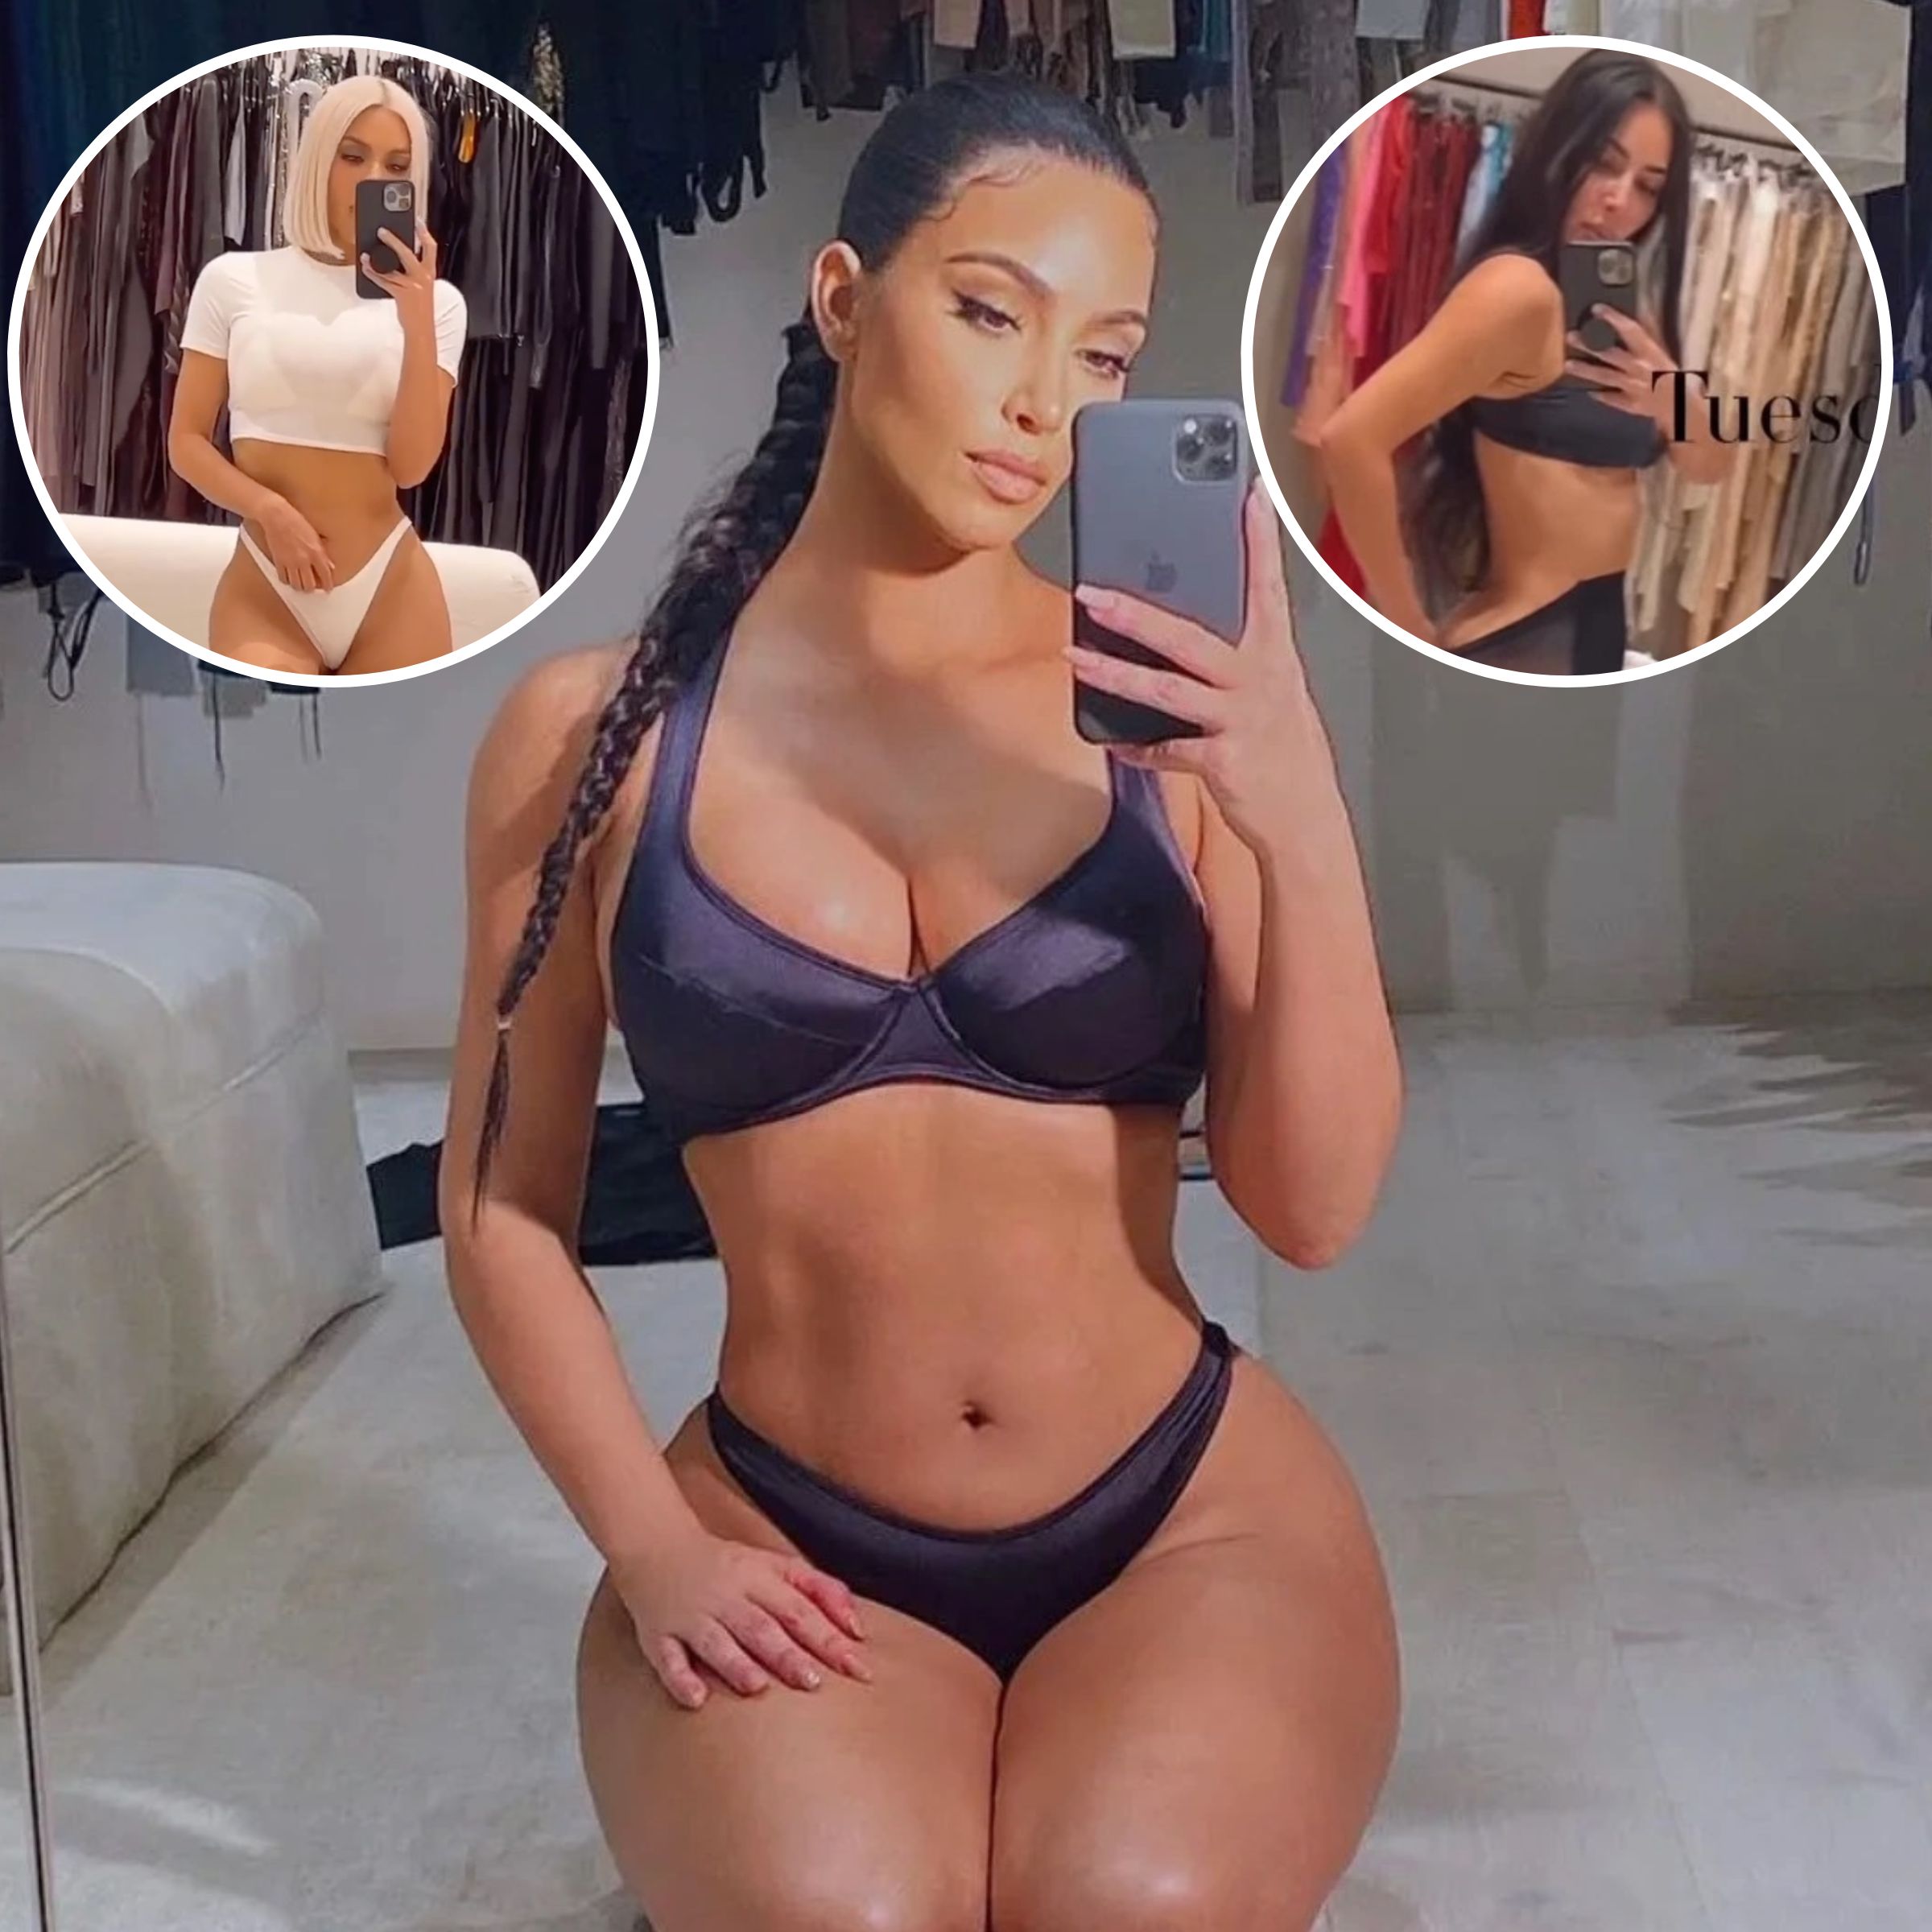 Kim Kardashian Porn Hd Pic - Kim Kardashian's Underwear Photos: Sexiest Bra, Panty Pictures